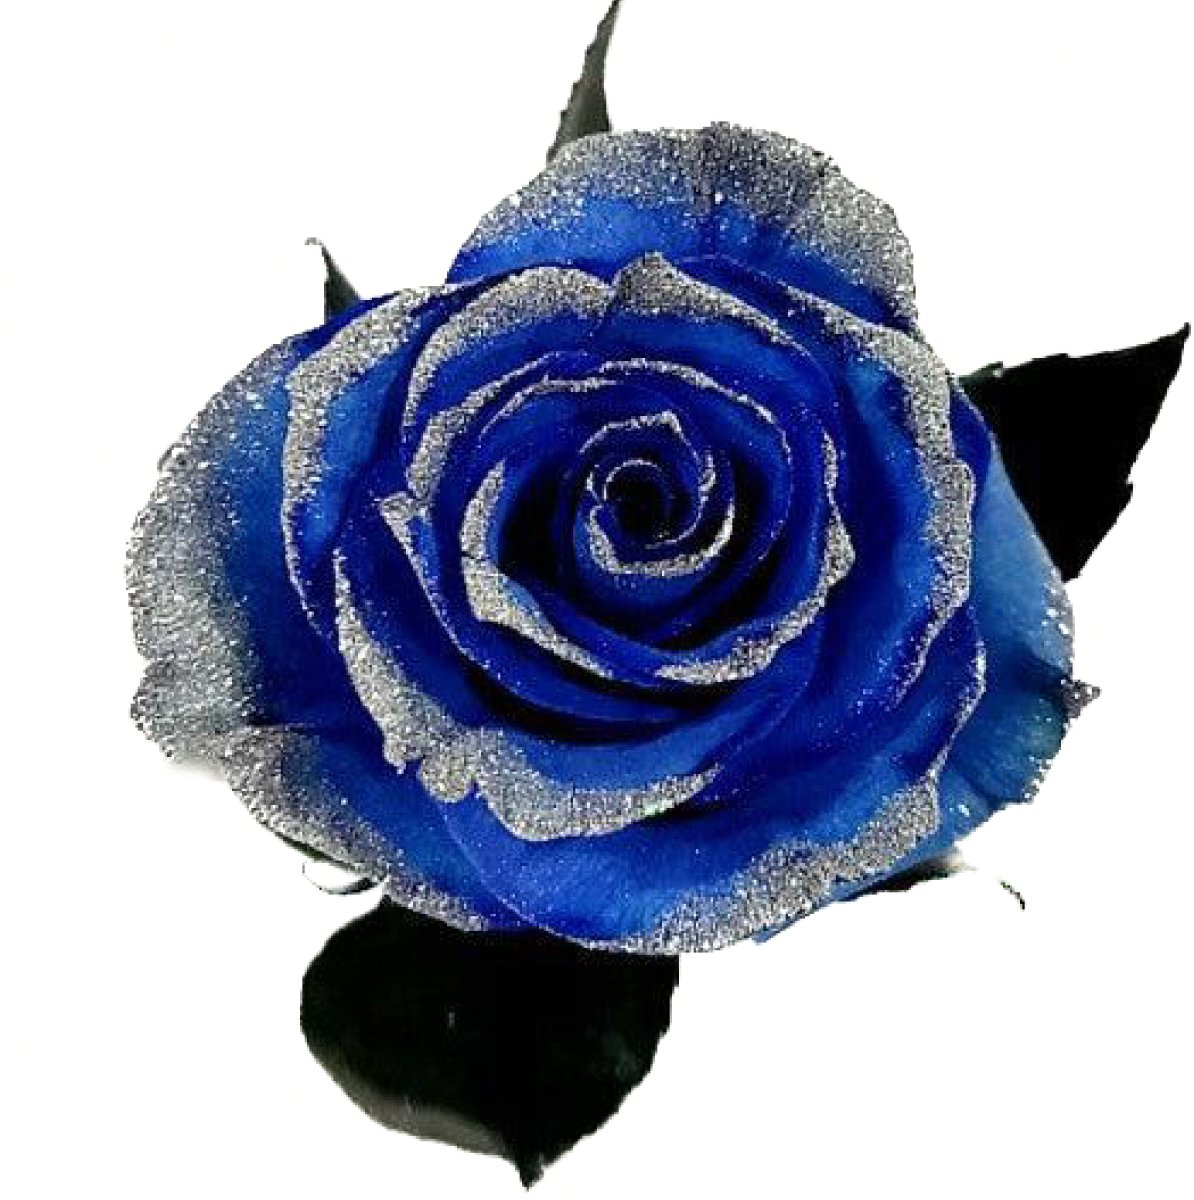 Premium Black Rose, Memorable Gift for Wife, Preserved Black Rose